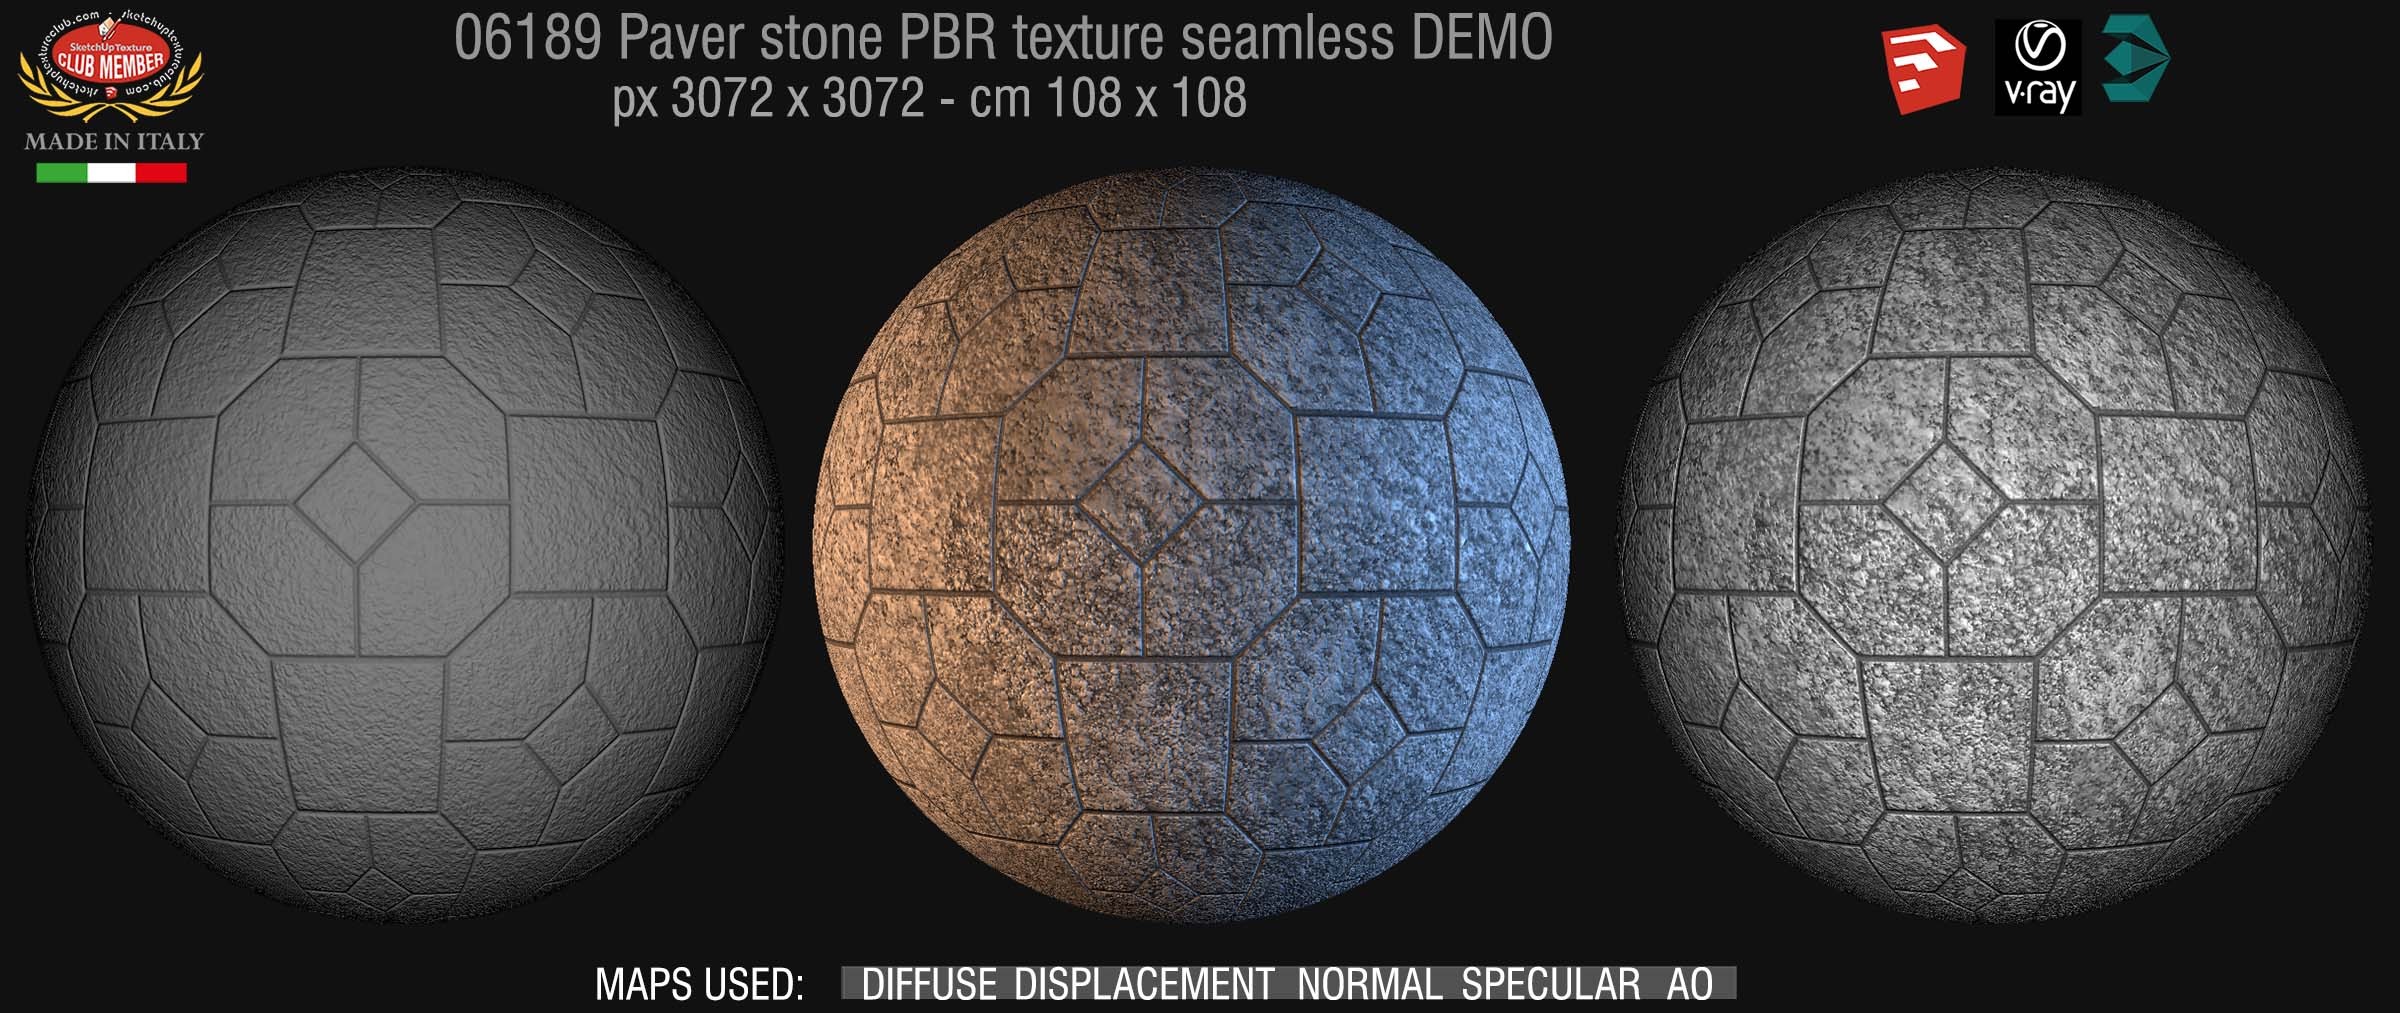 06189 Pavers stone PBR texture seamless DEMO